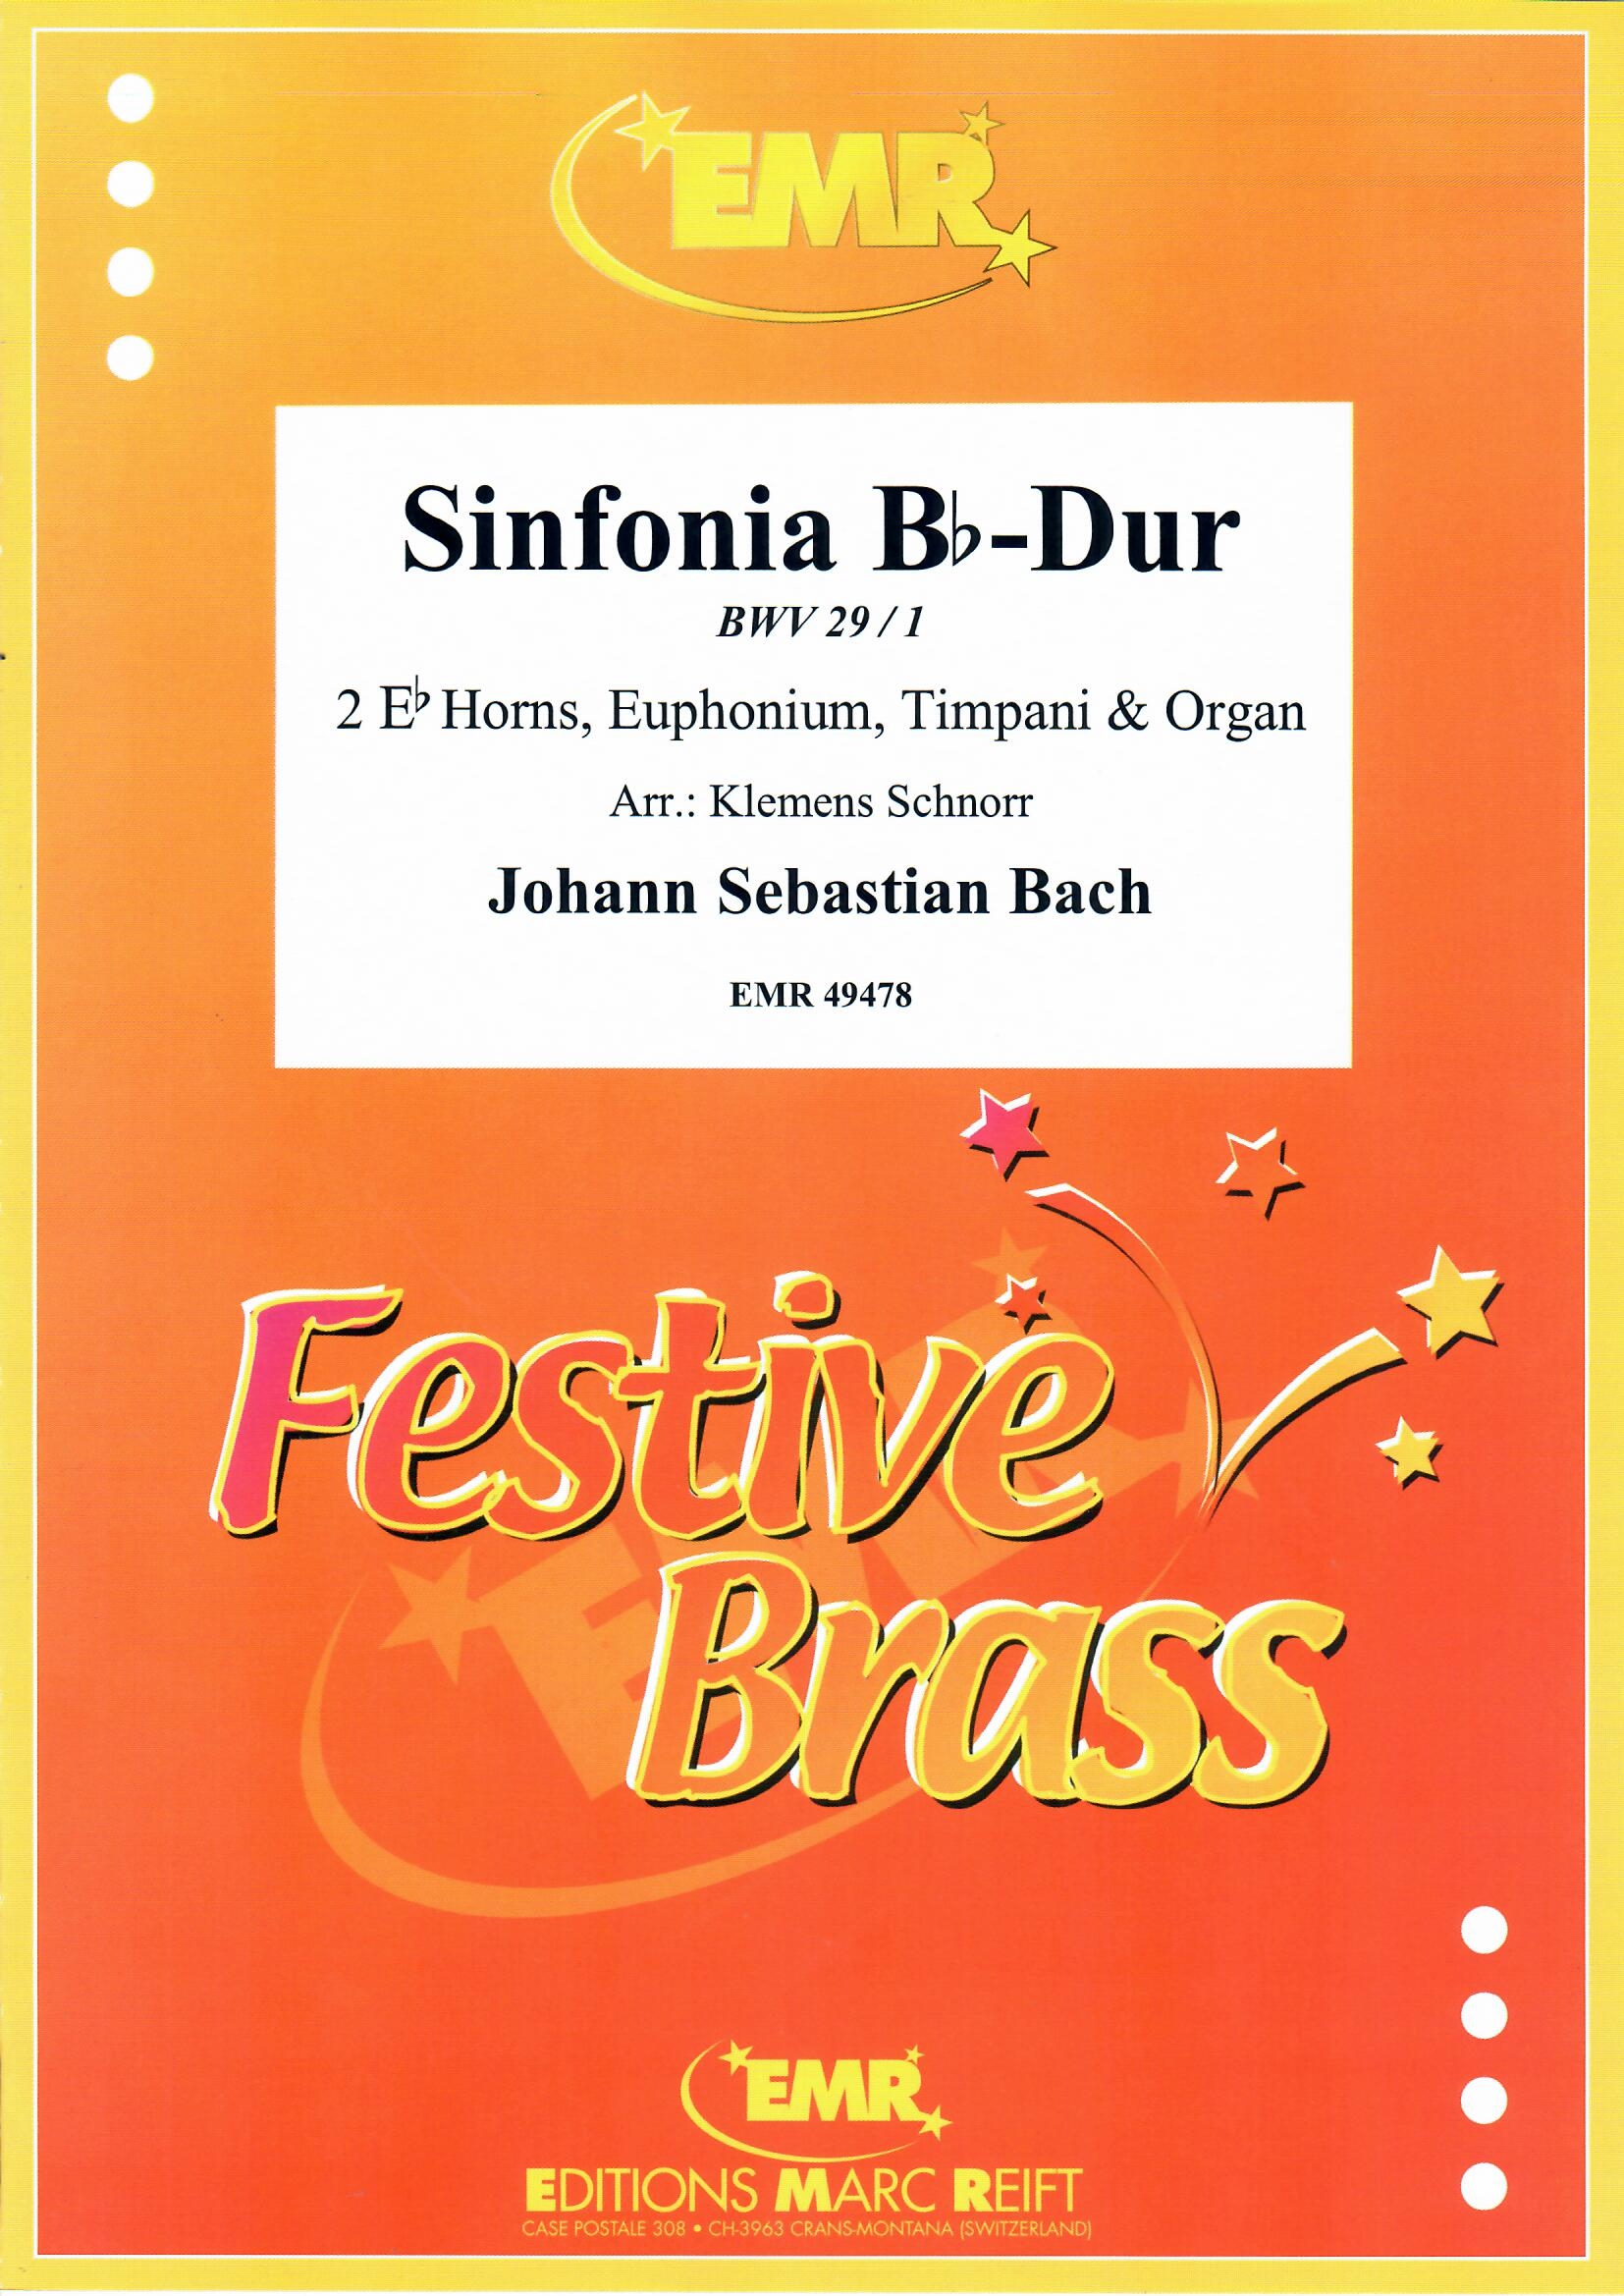 SINFONIA BB-DUR, NEW & RECENT Publications, Trios